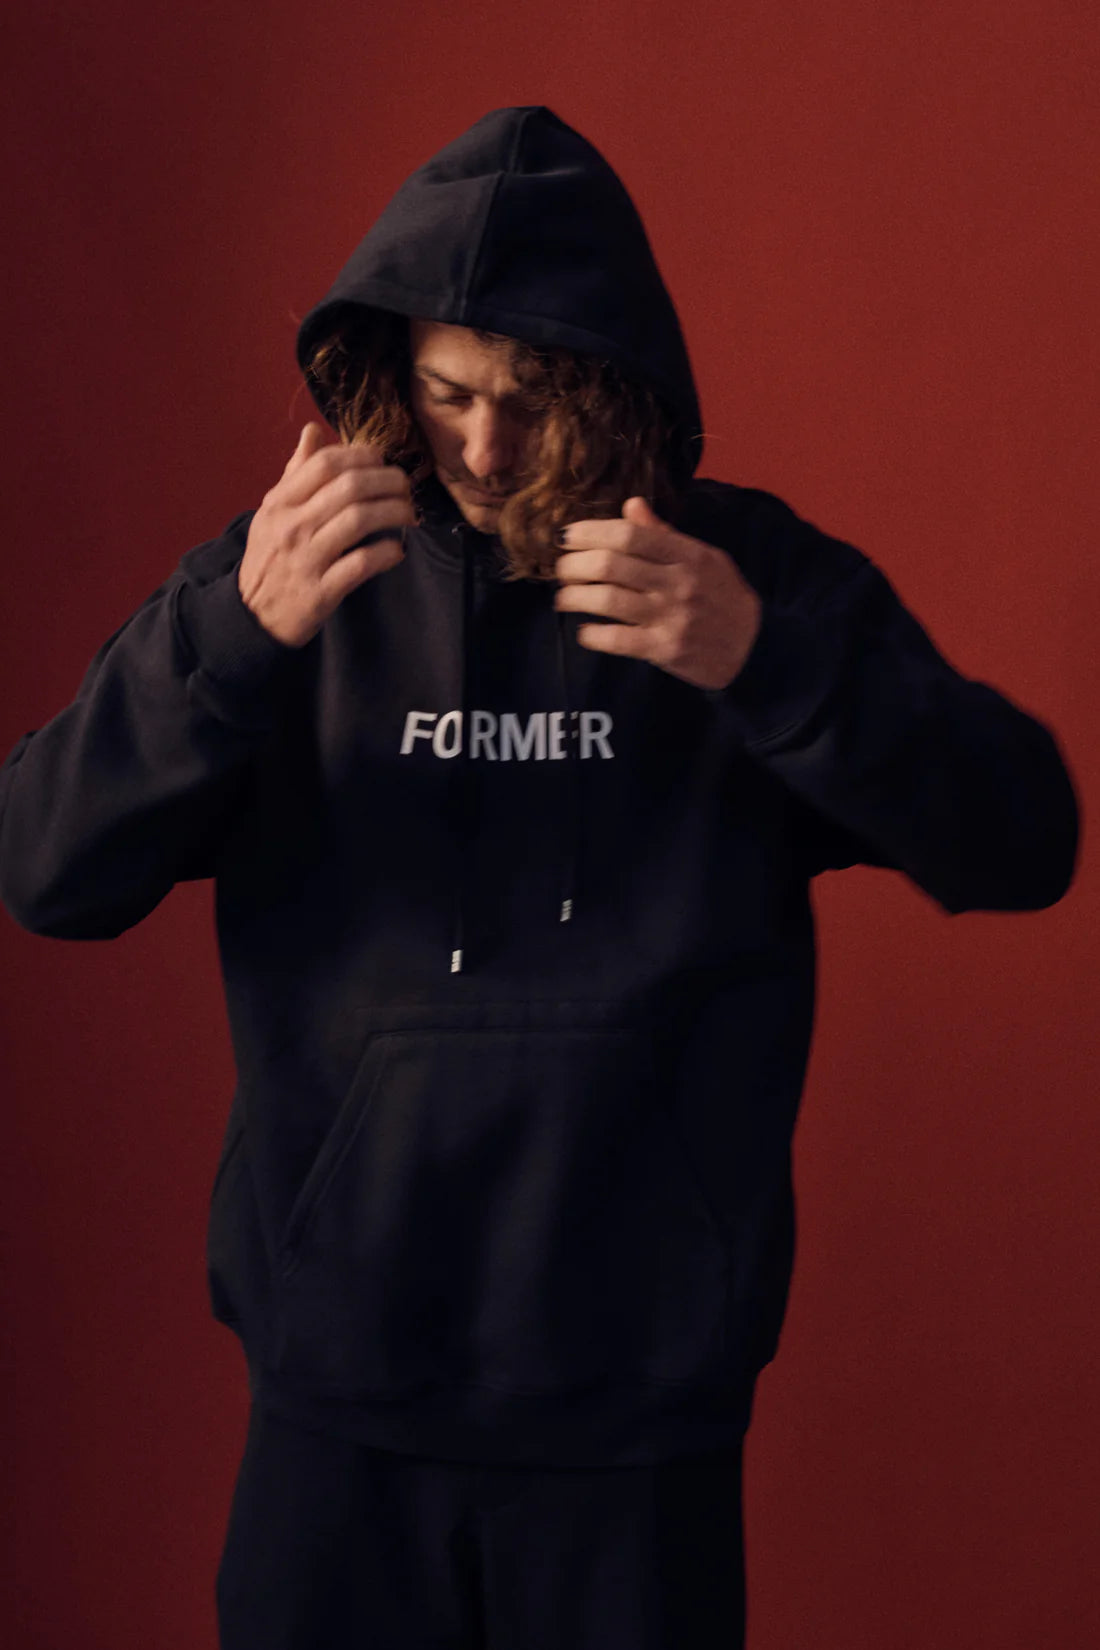 FORMER - Legacy Hood - Black